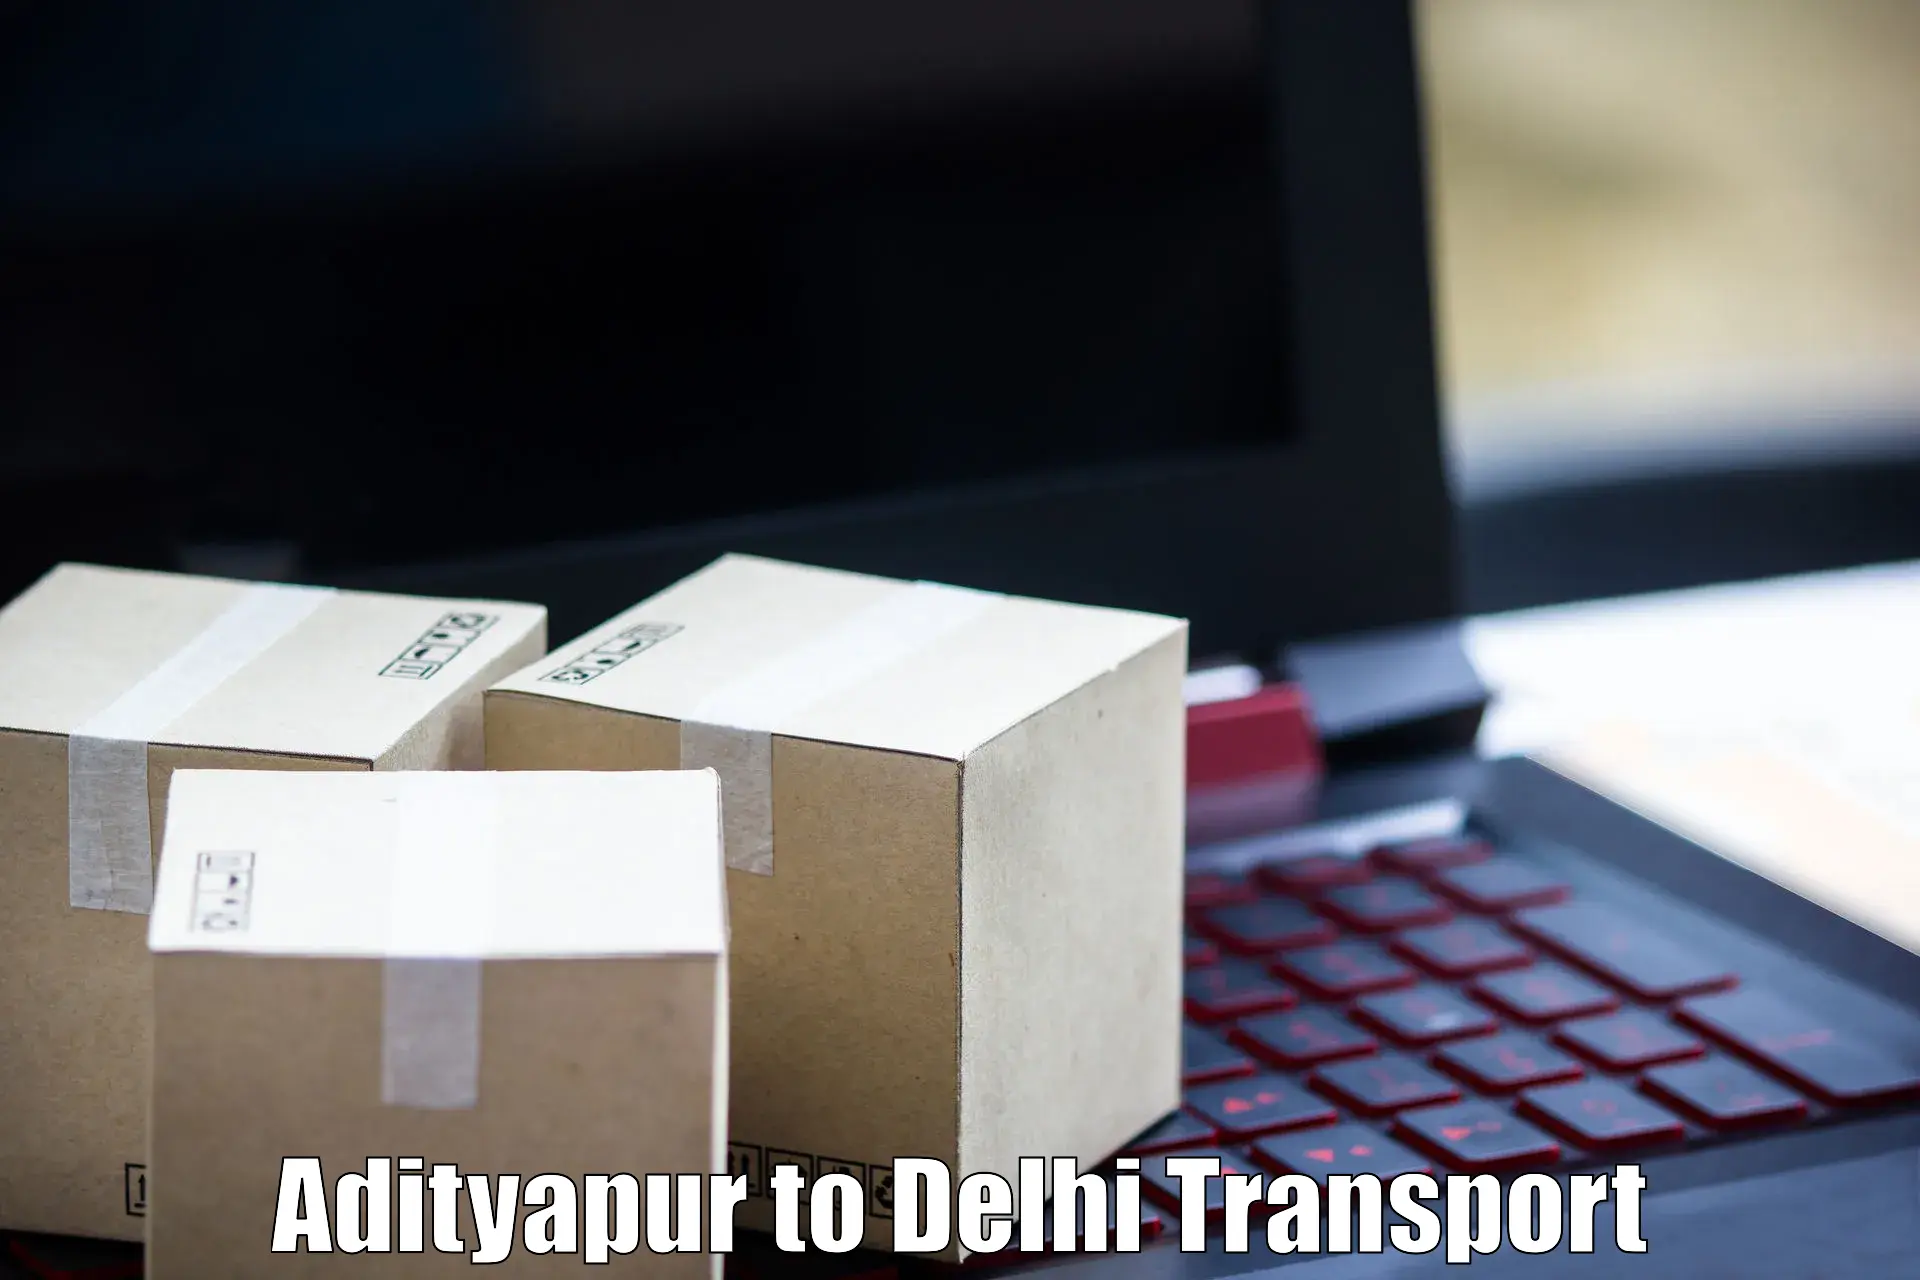 Cycle transportation service Adityapur to Delhi